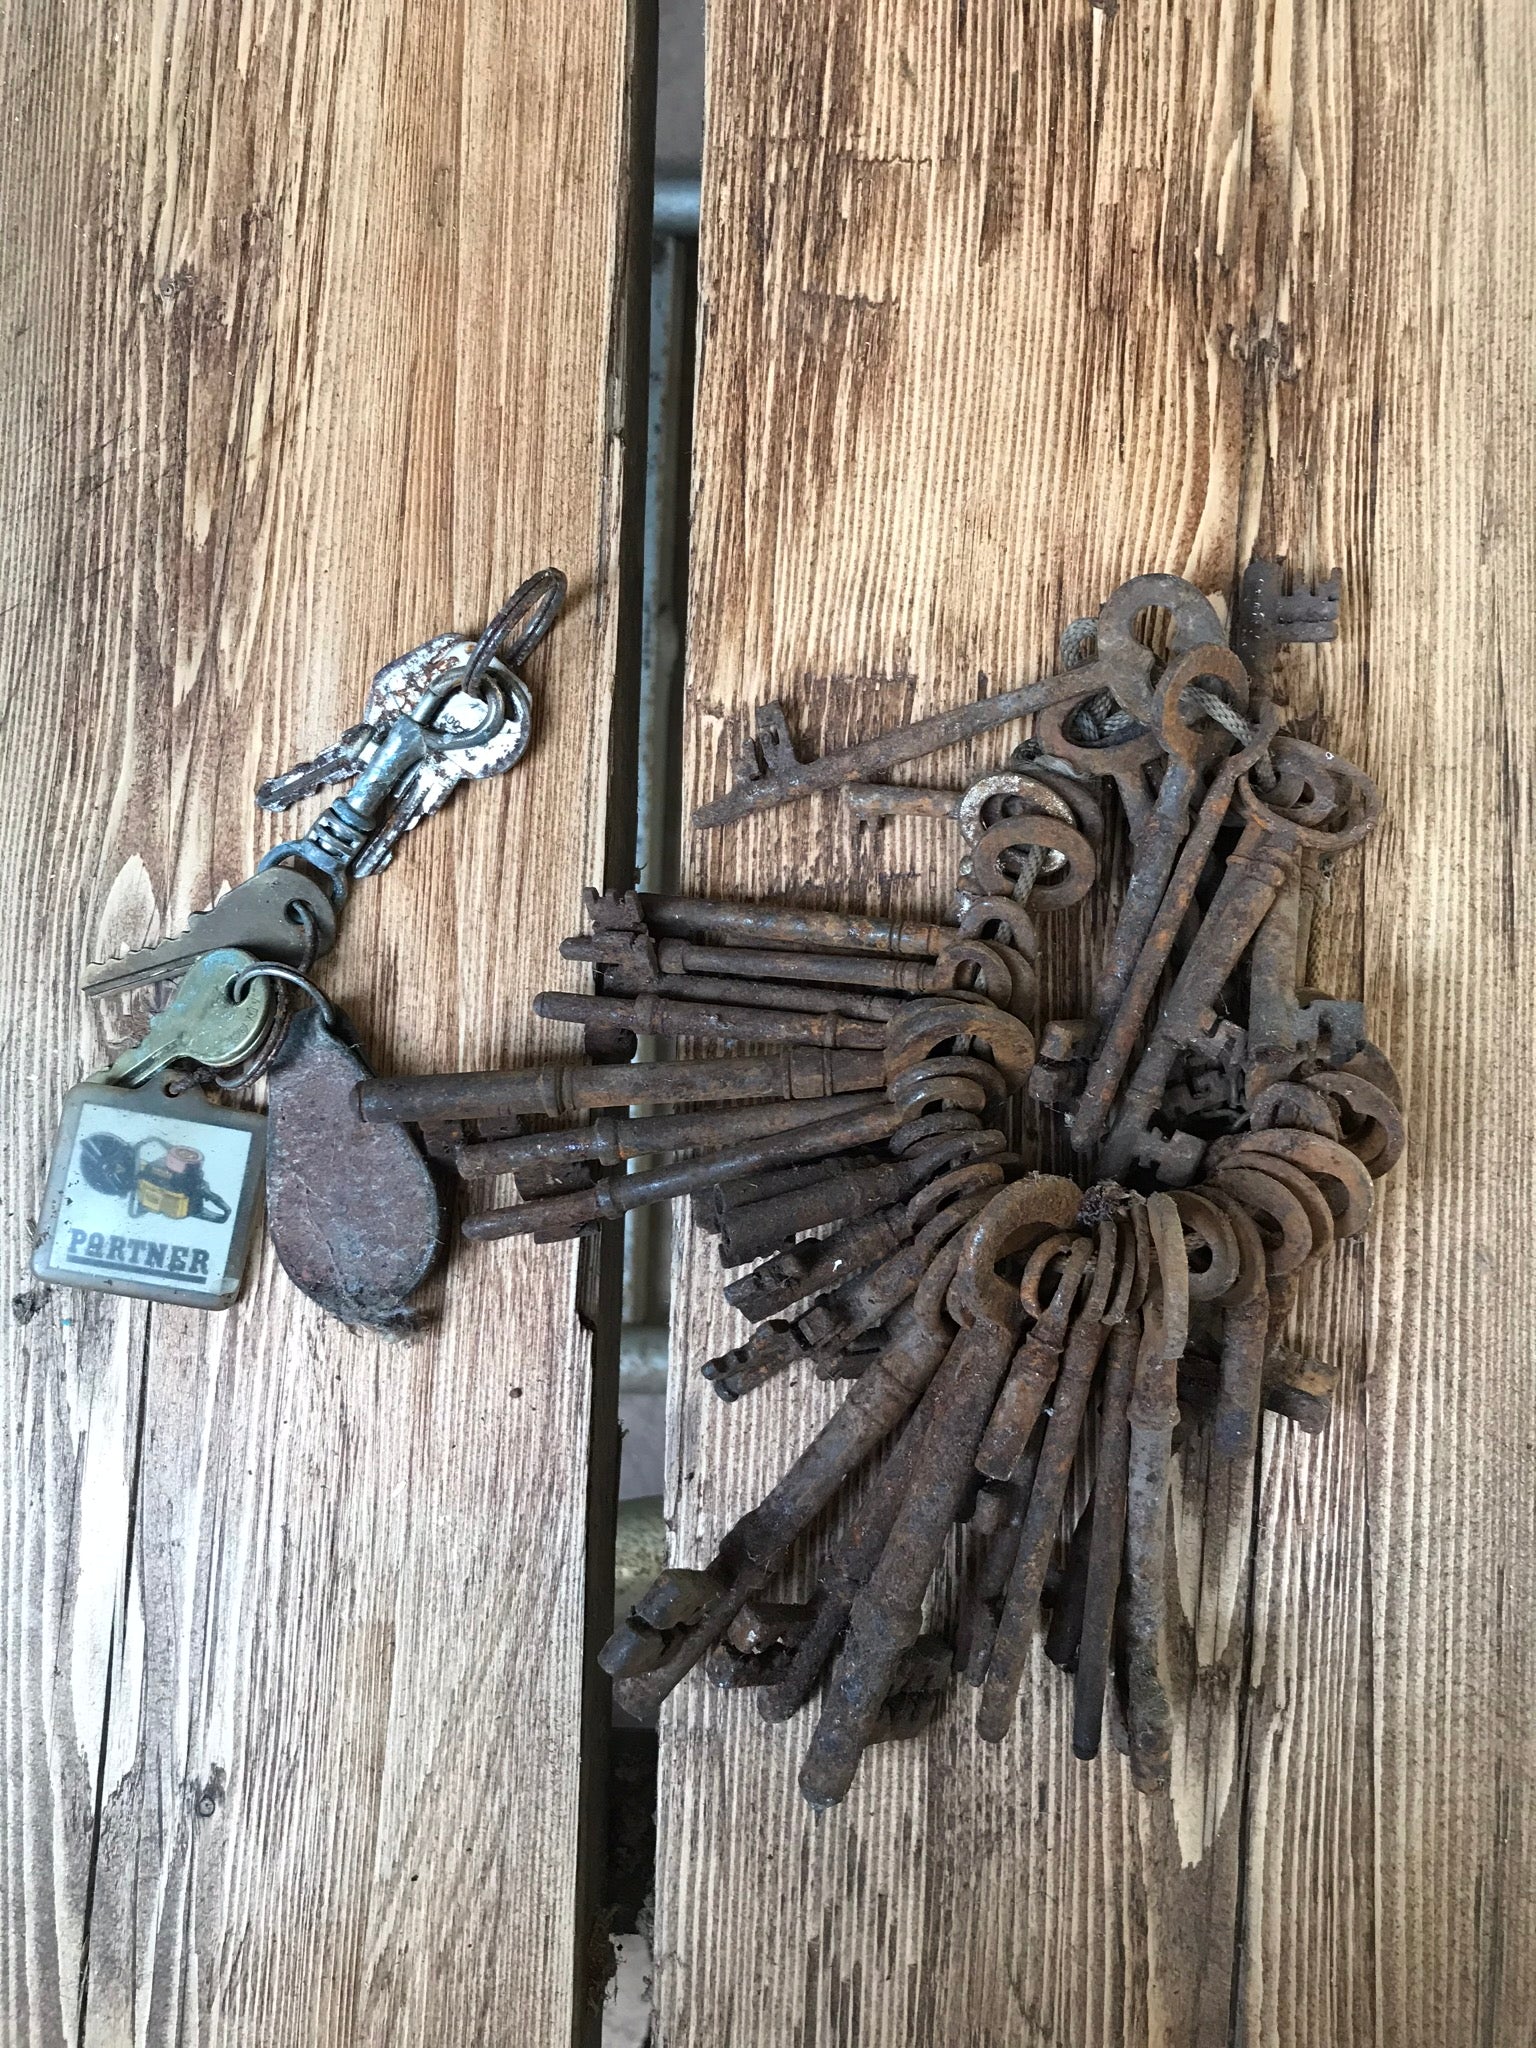 Vintage collection of antique cast iron keys